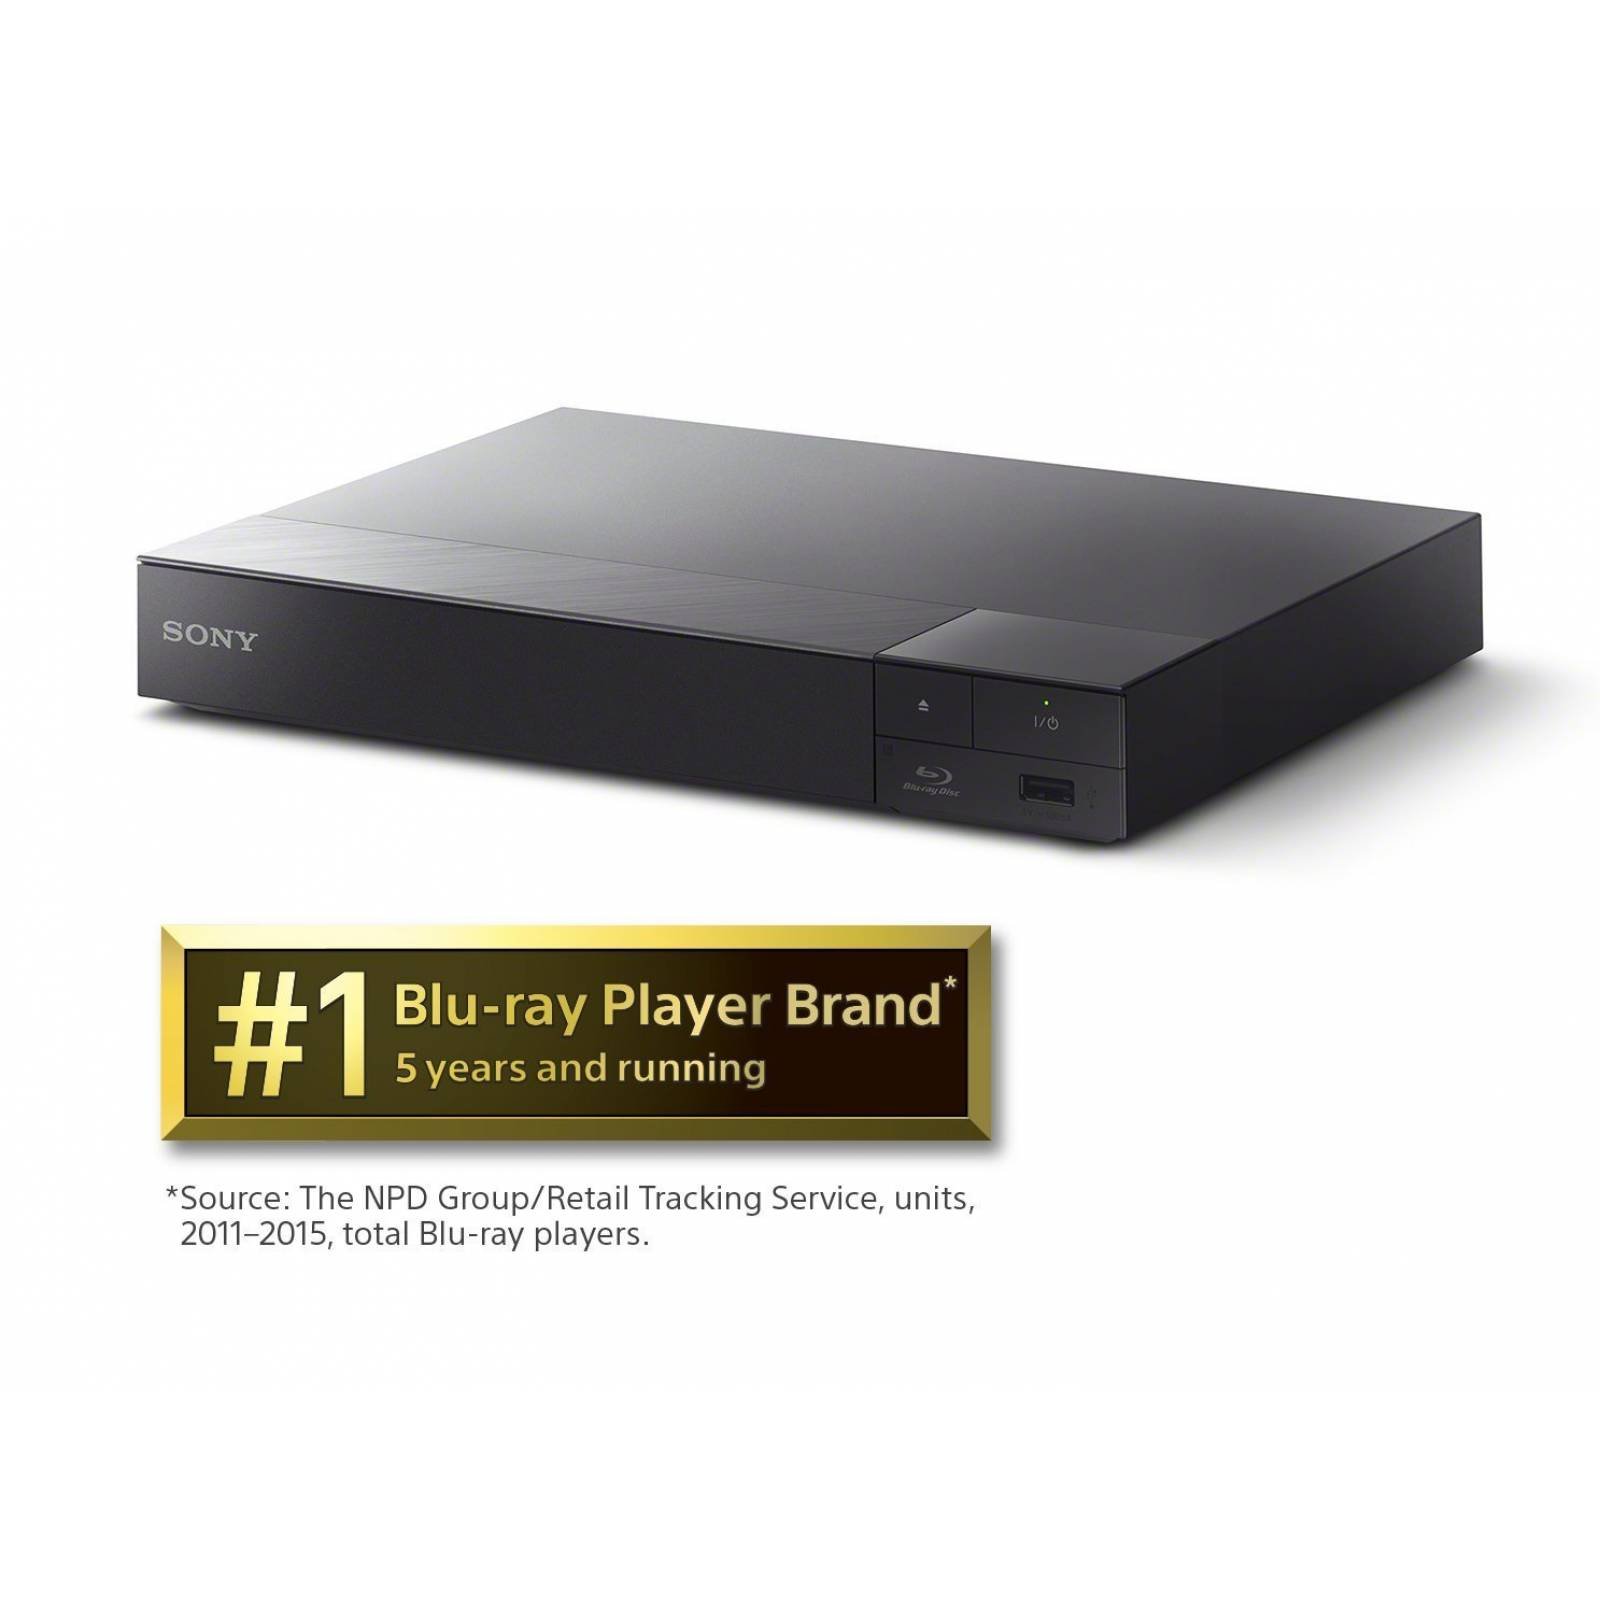 Reproductor Blu-ray Sony Bdps6700 4k - Modelo 2016